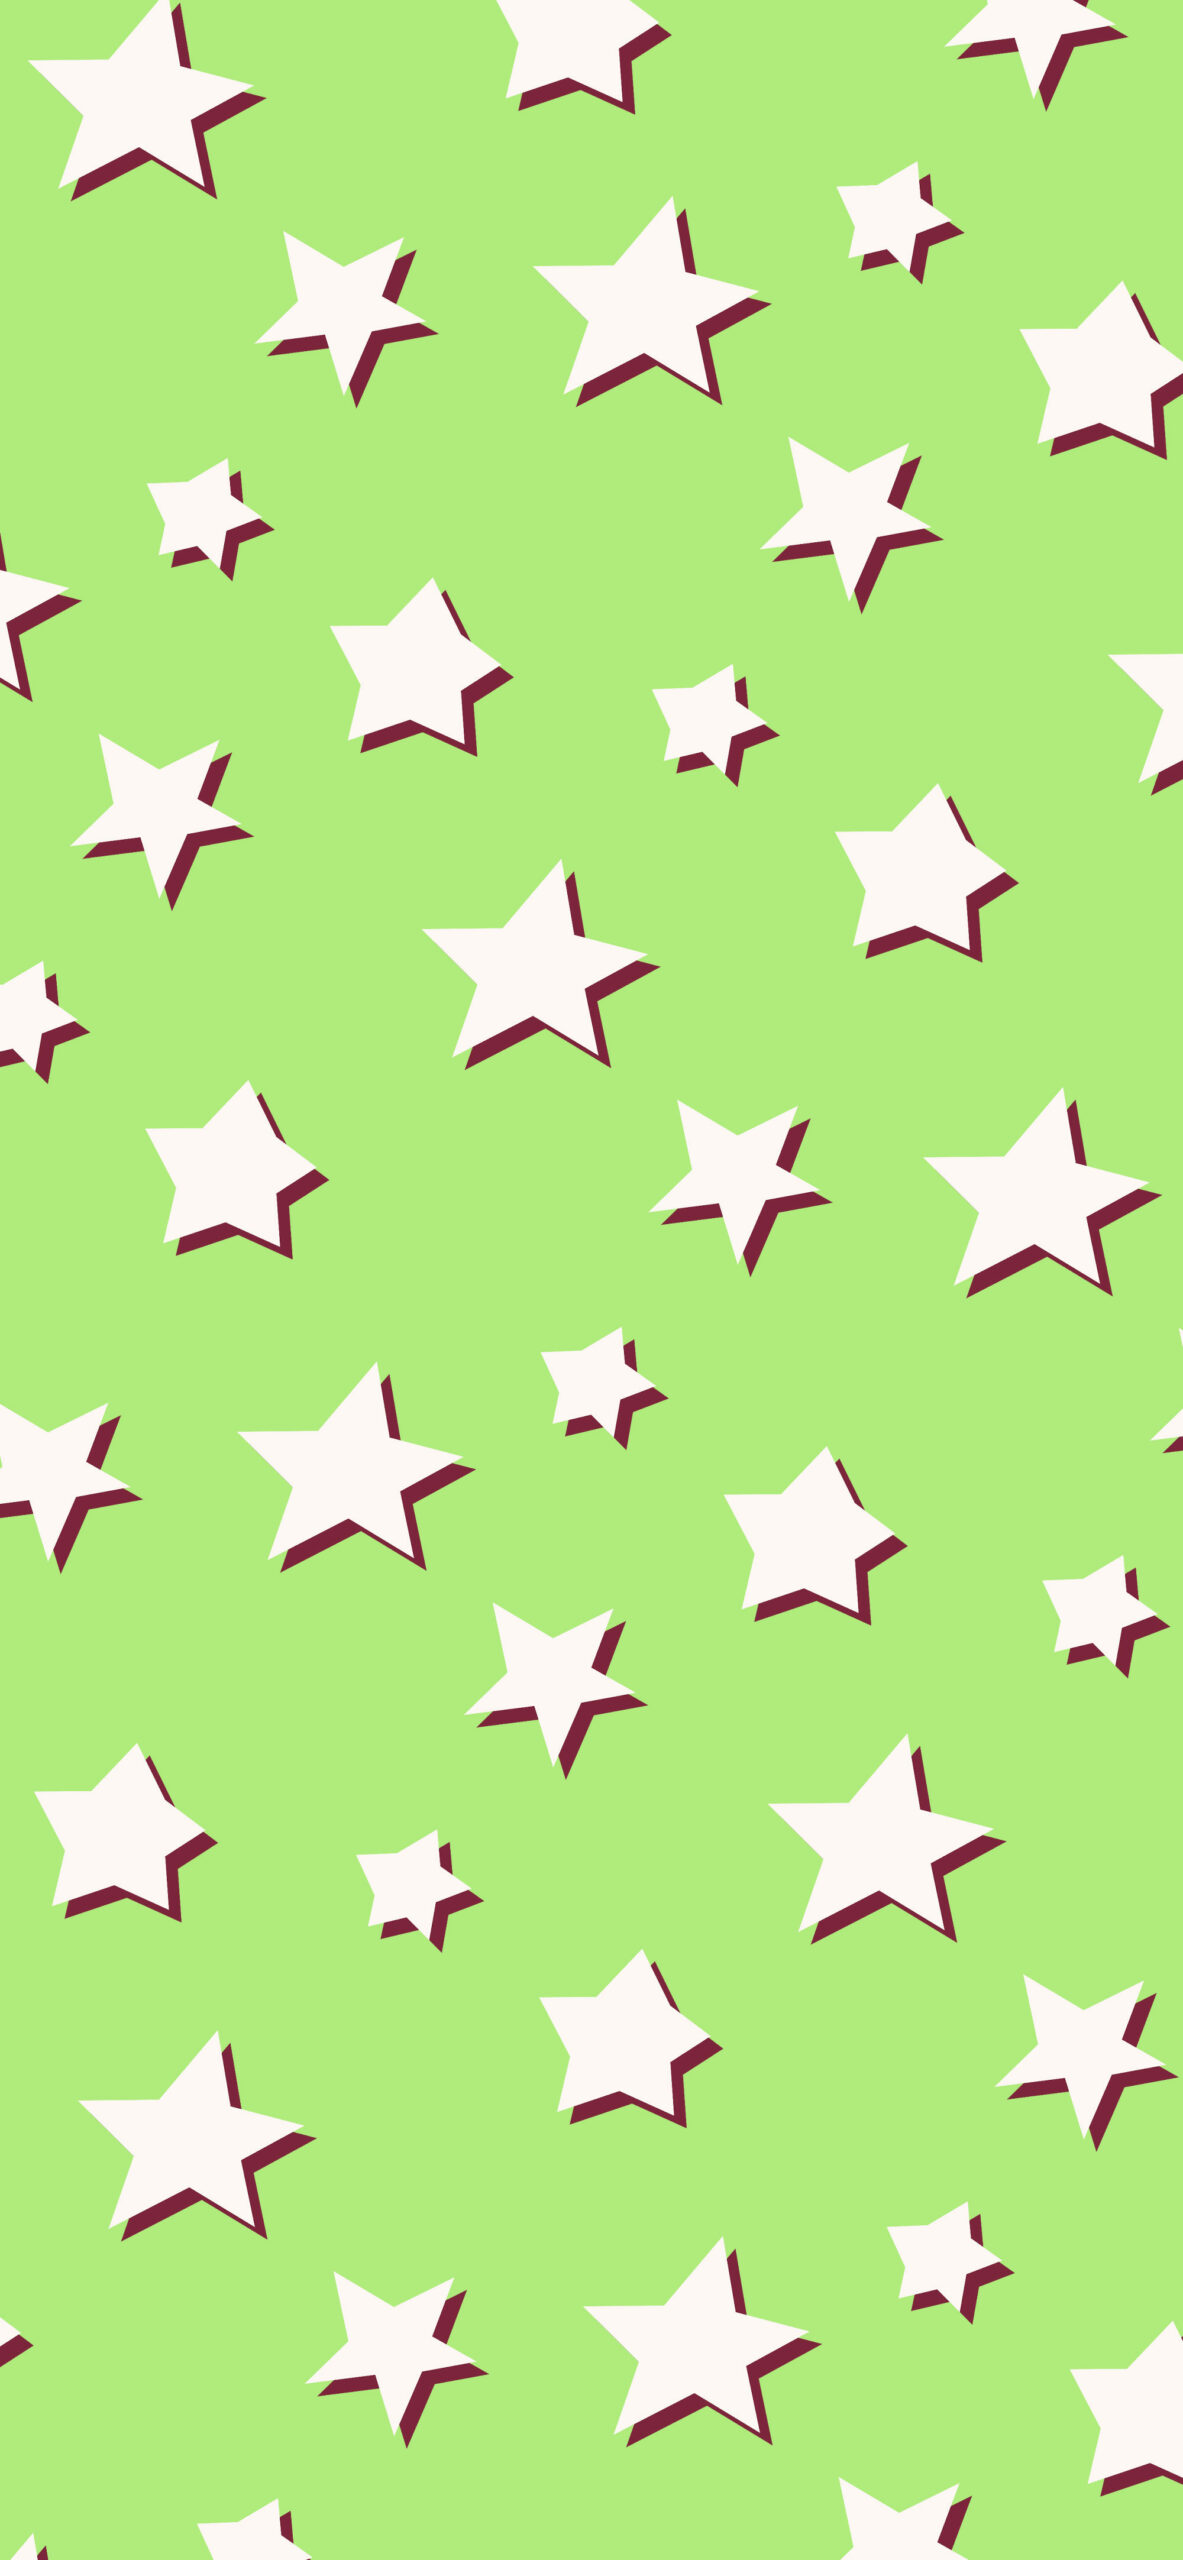 stars pattern green wallpaper